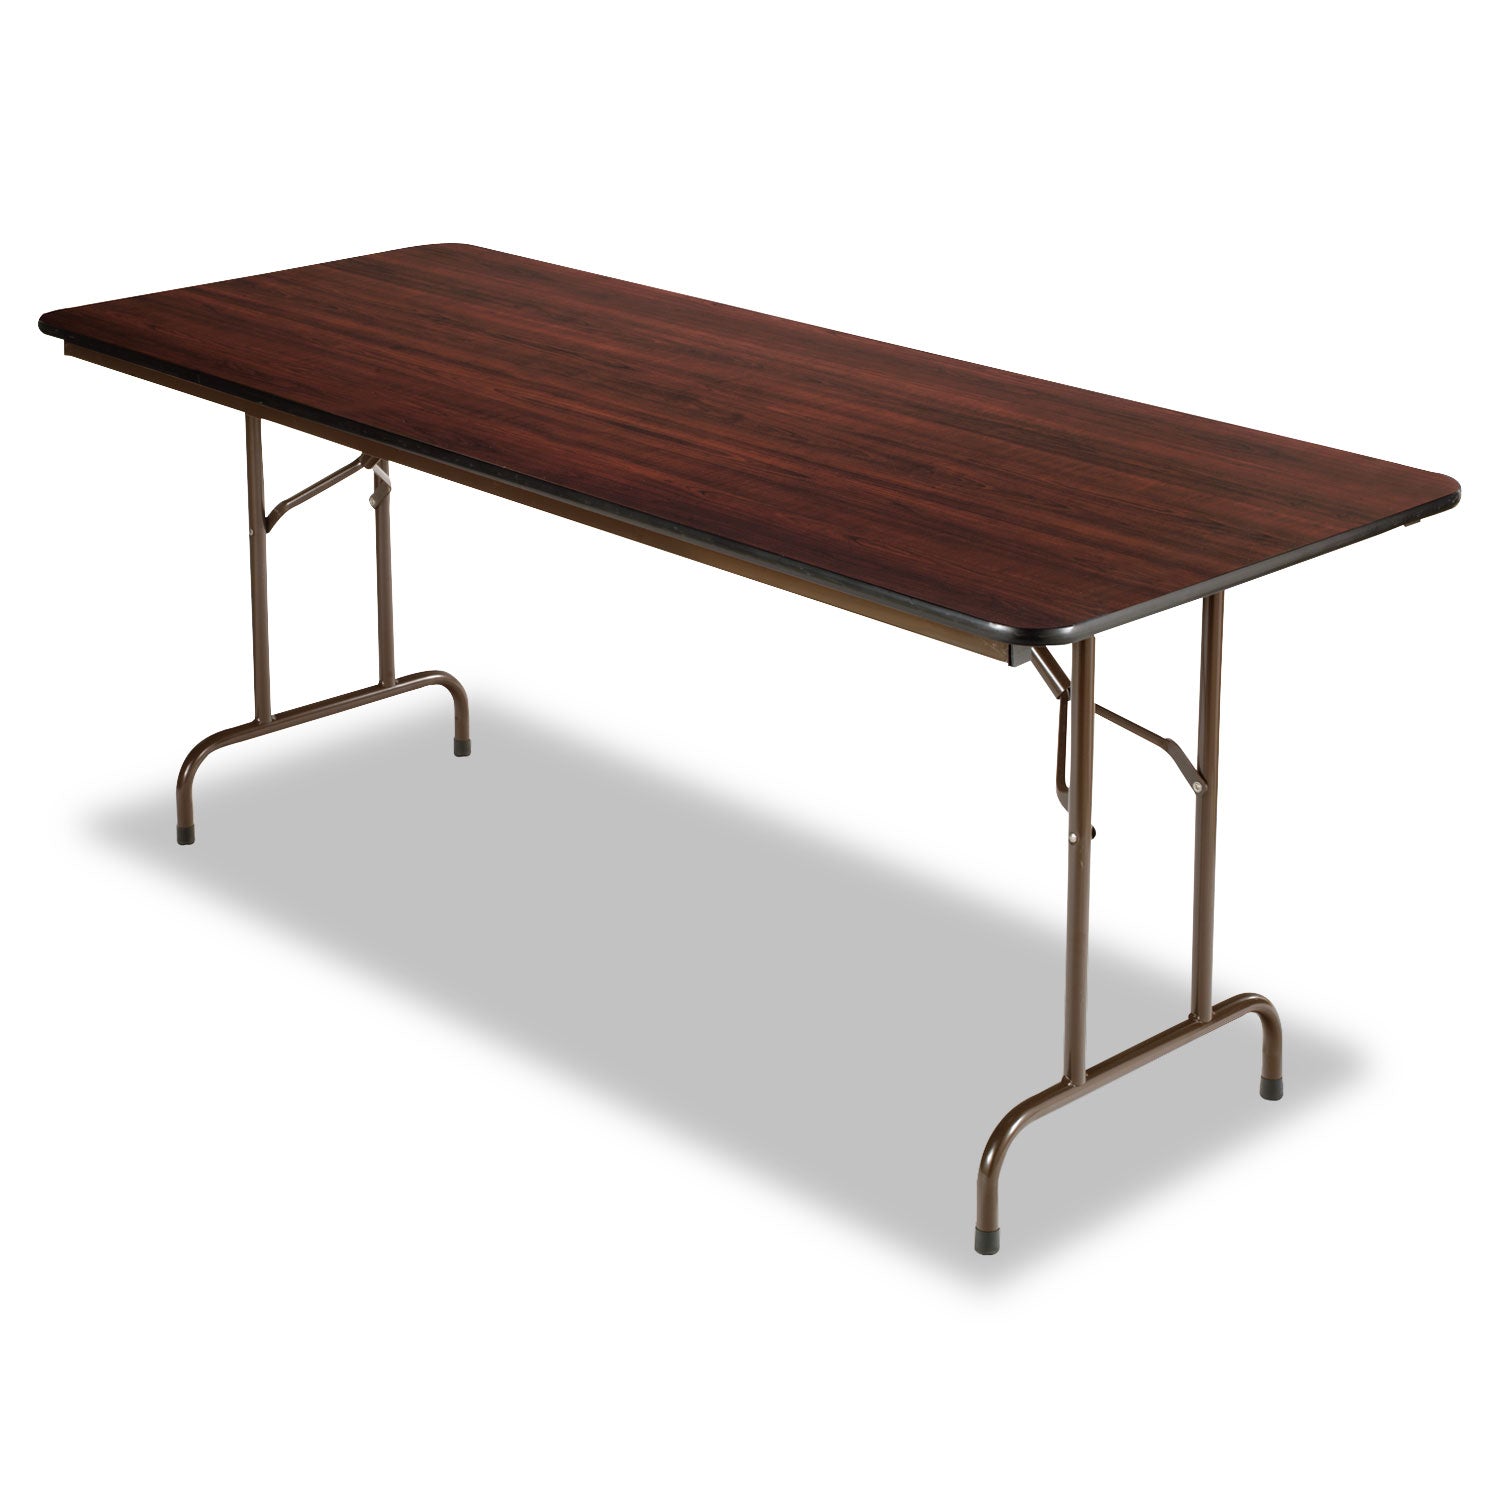 wood-folding-table-rectangular-7188w-x-2988d-x-2913h-mahogany_aleft727230my - 1